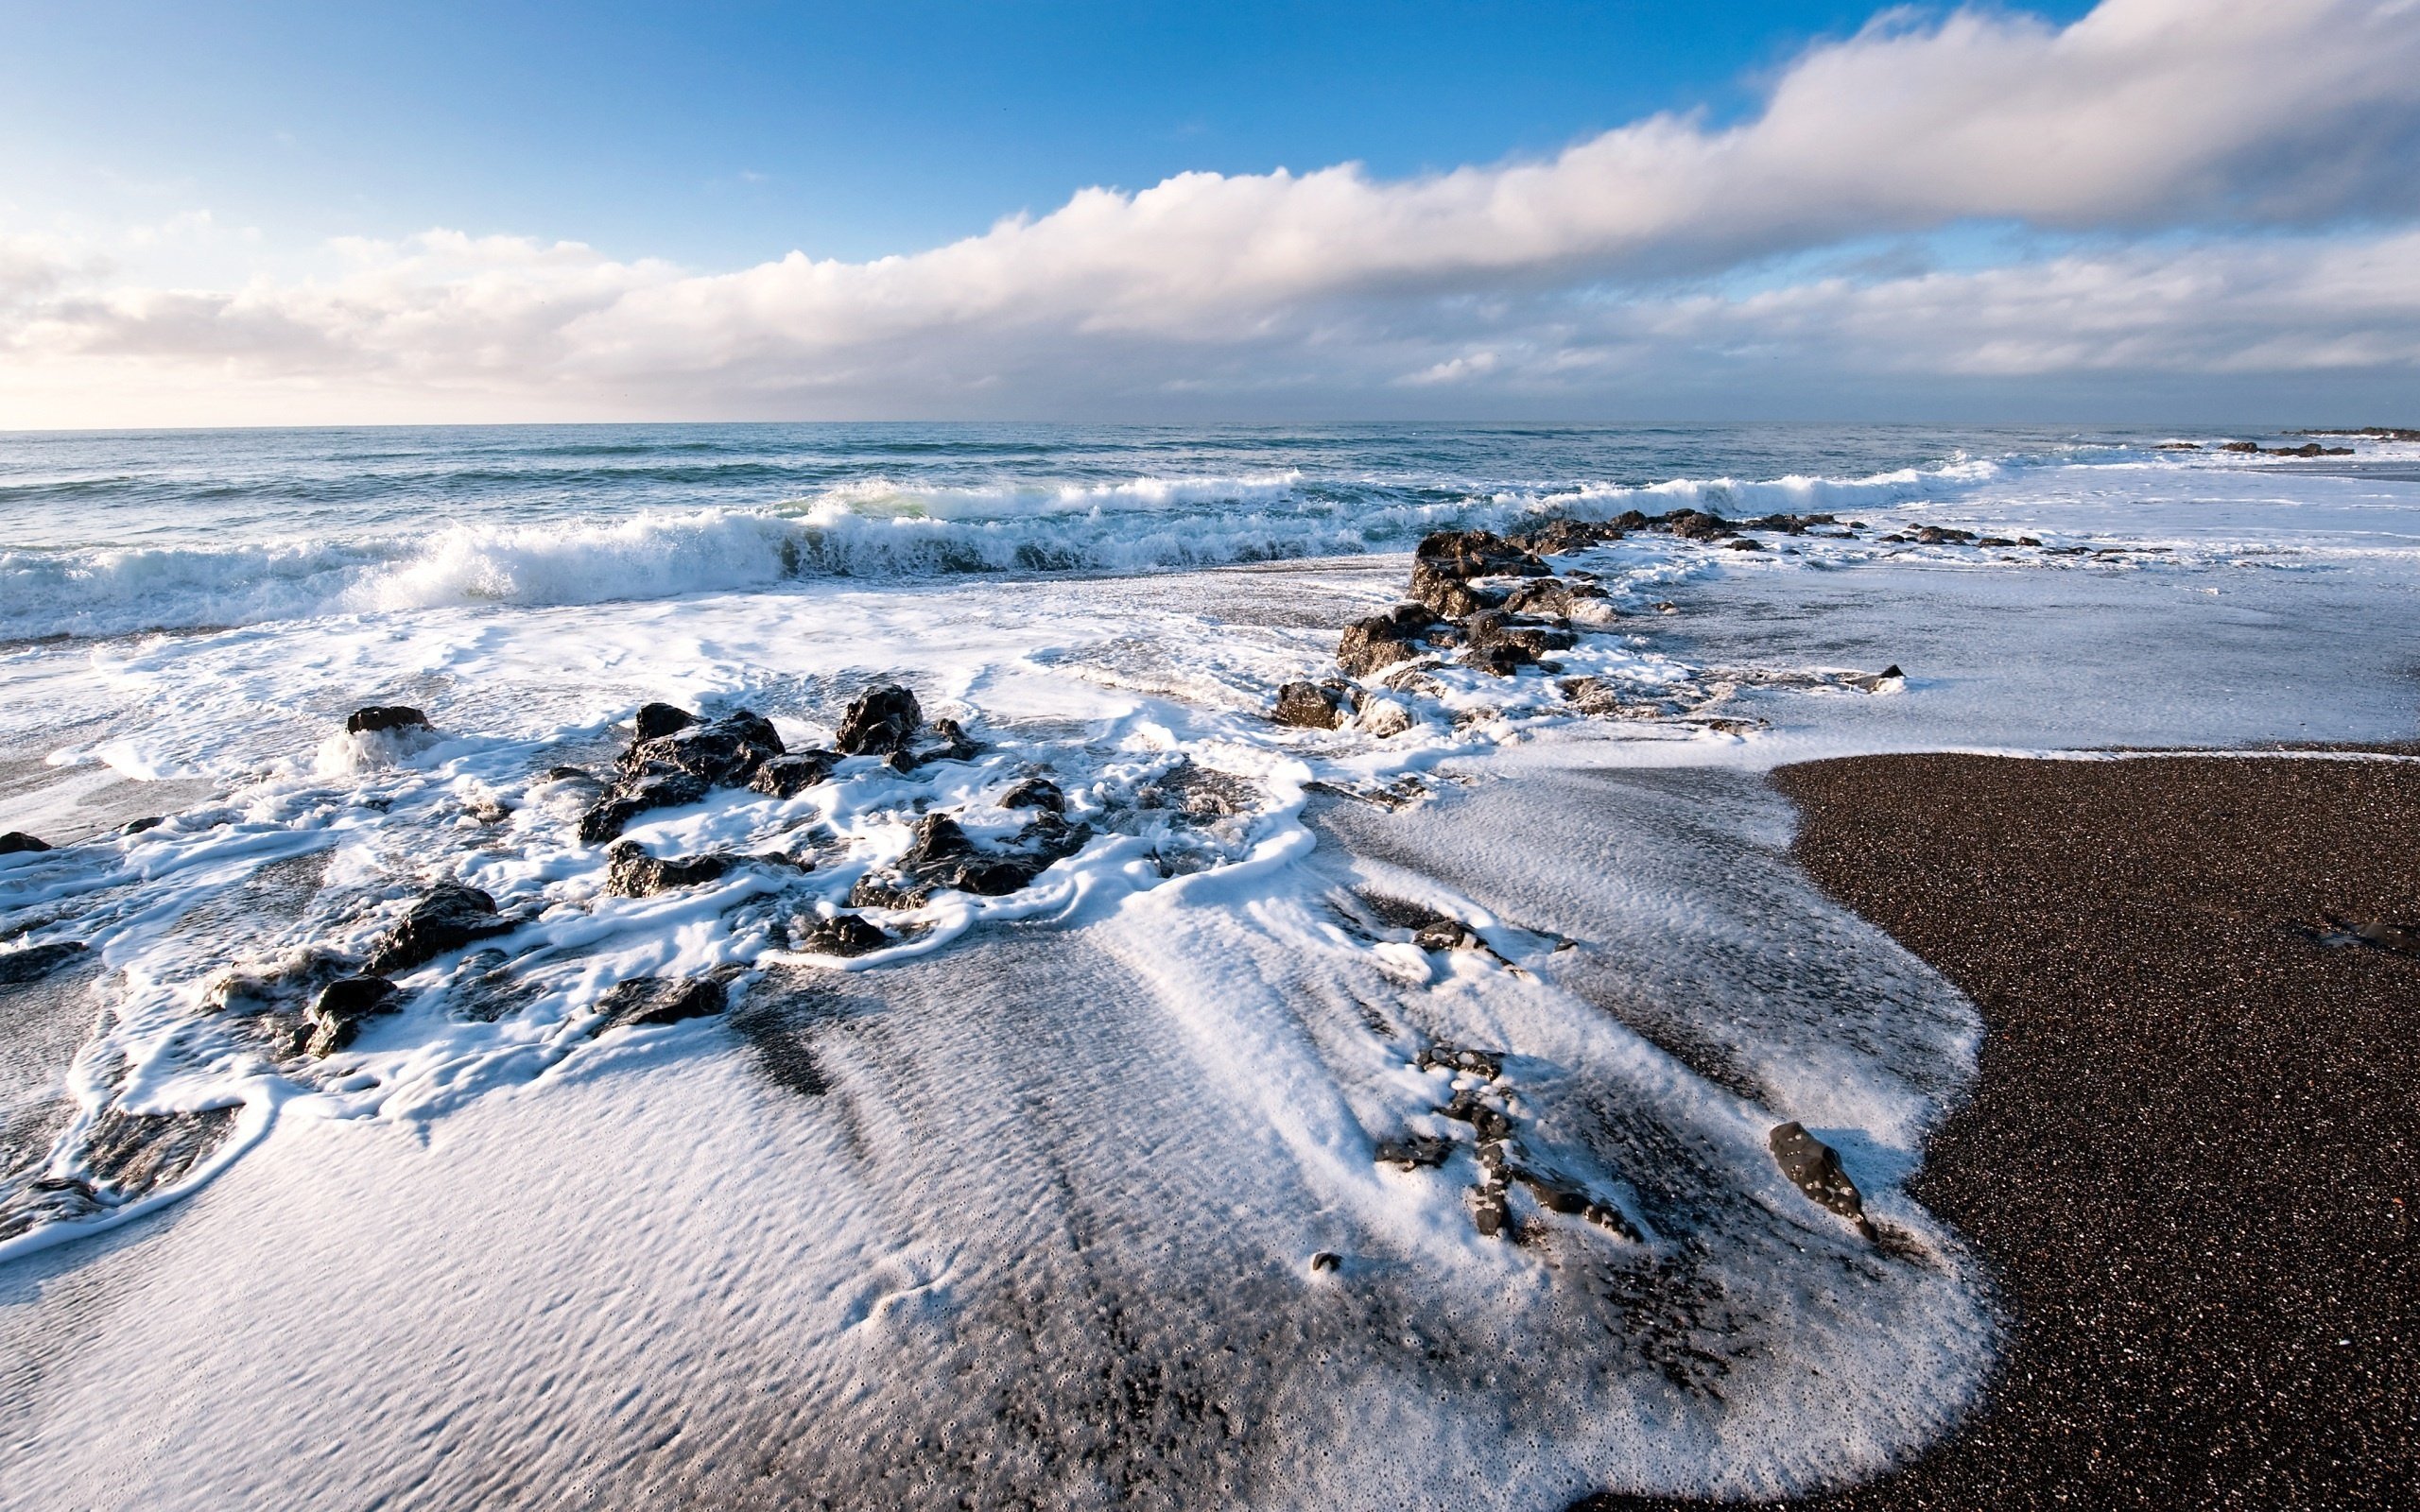 Image: Shore, waves, foam, sand, water, sea, sky, clouds, horizon